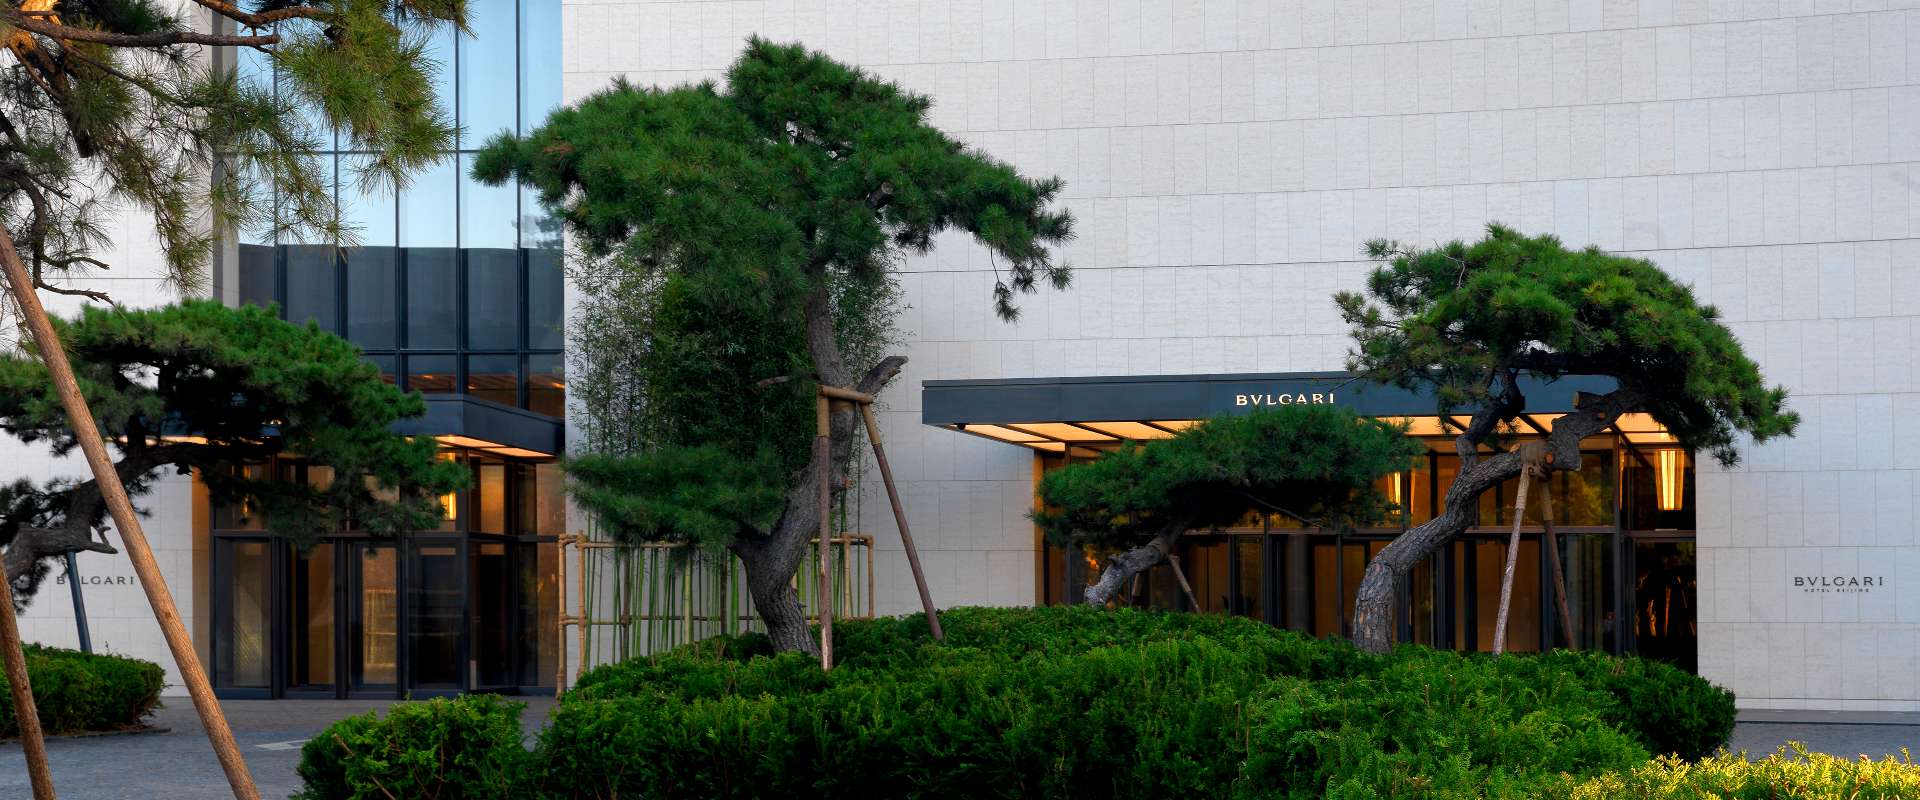 the-bvlgari-hotel-beijing-the-entrance